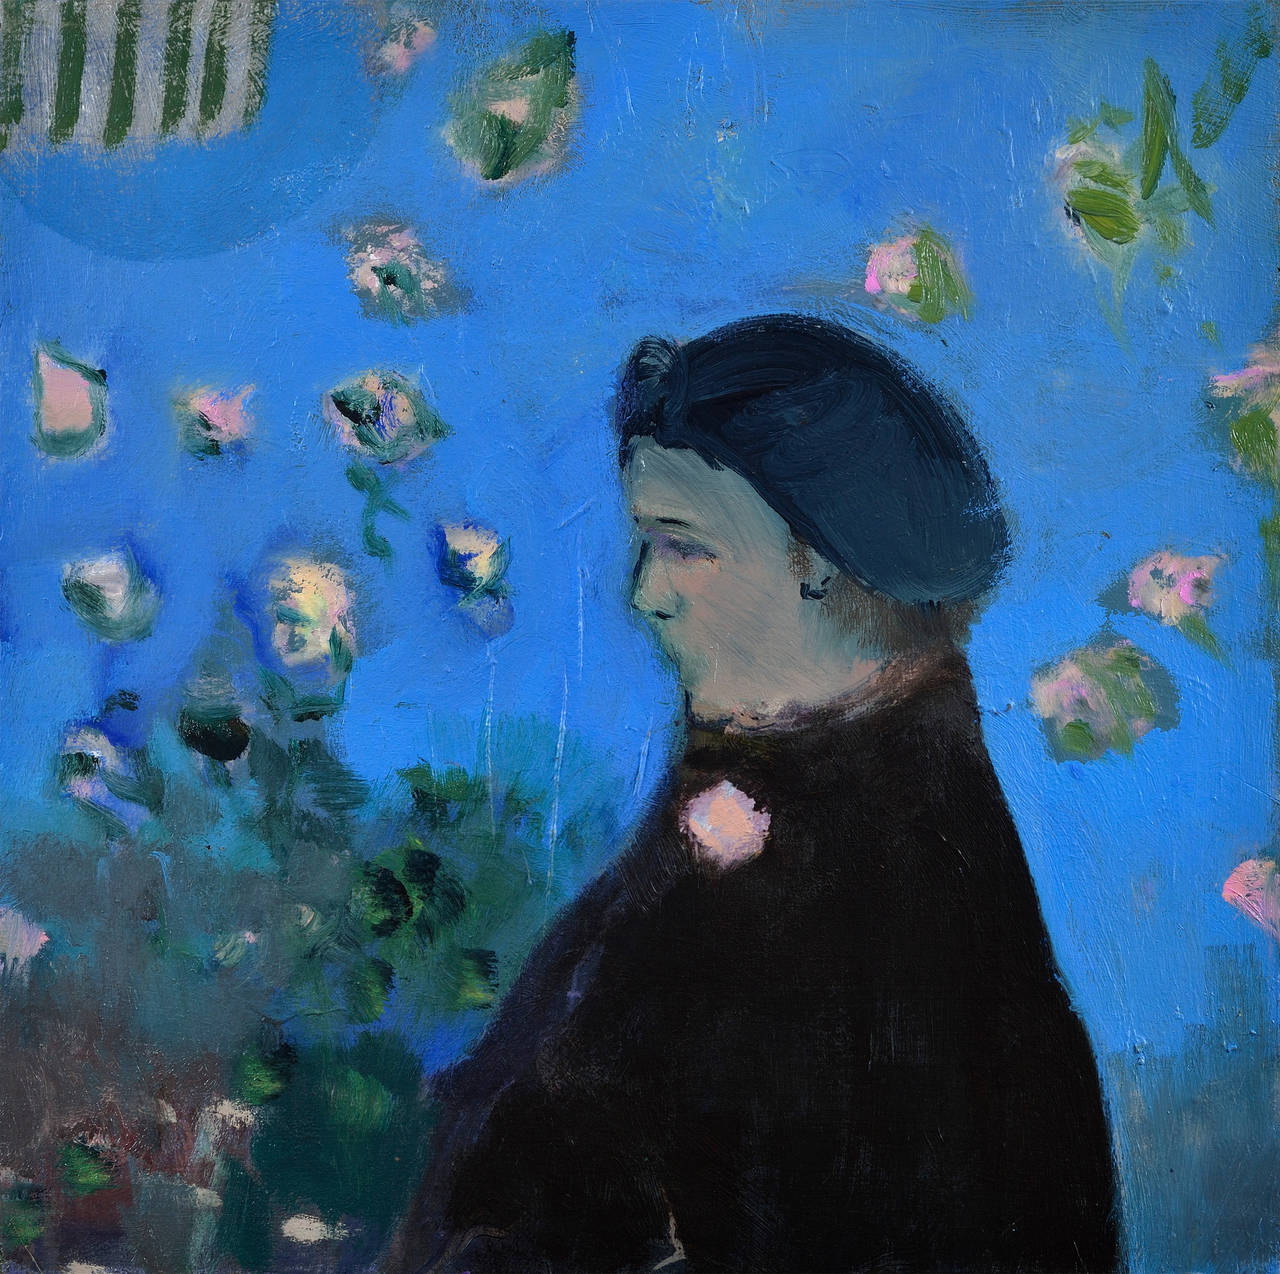 Jennifer Hornyak Portrait Painting - Lady with Broach - female portrait in blue, blue, black, pink figurative oil